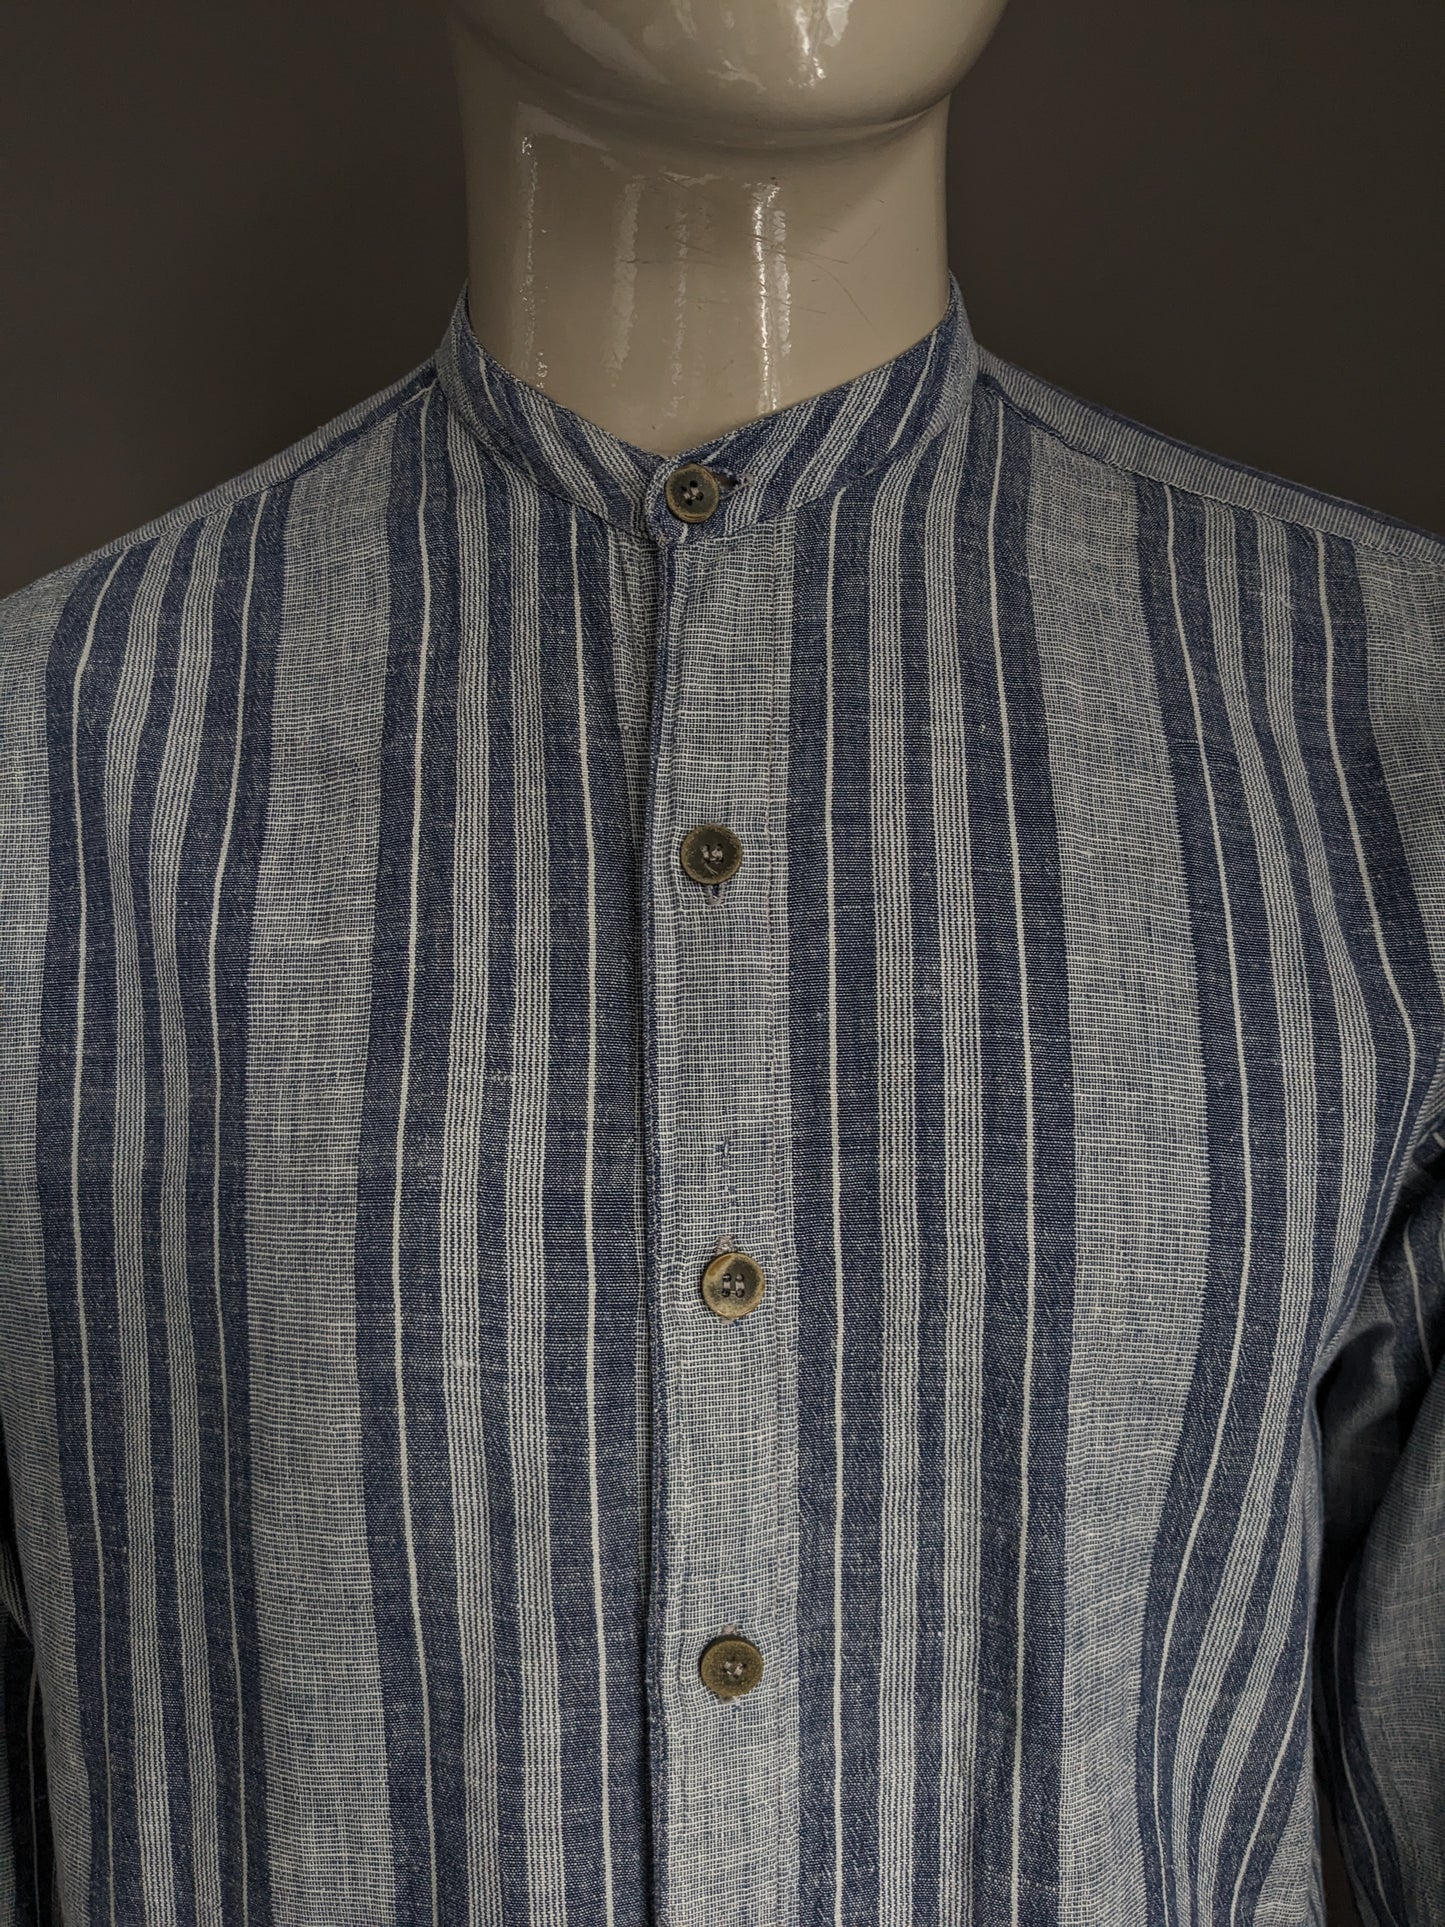 Camiseta Vintage Casa Blanca vertical / agricultores / cuello Mao. Gris azul rayado. Tamaño xl.